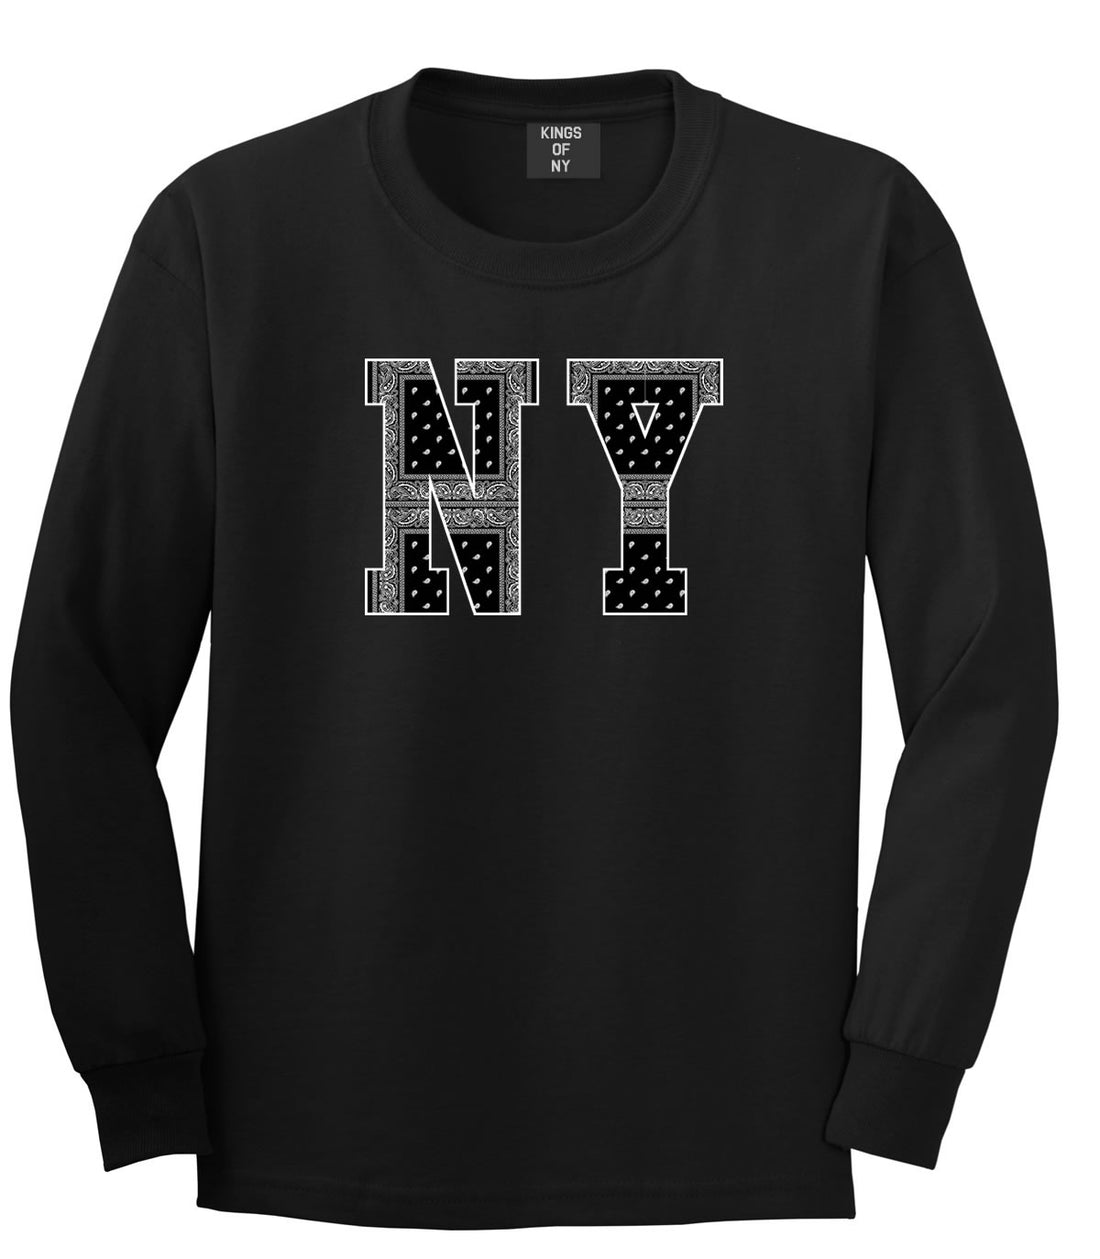 New York Bandana NYC Black by Kings Of NY Gang Flag Long Sleeve T-Shirt In Black by Kings Of NY